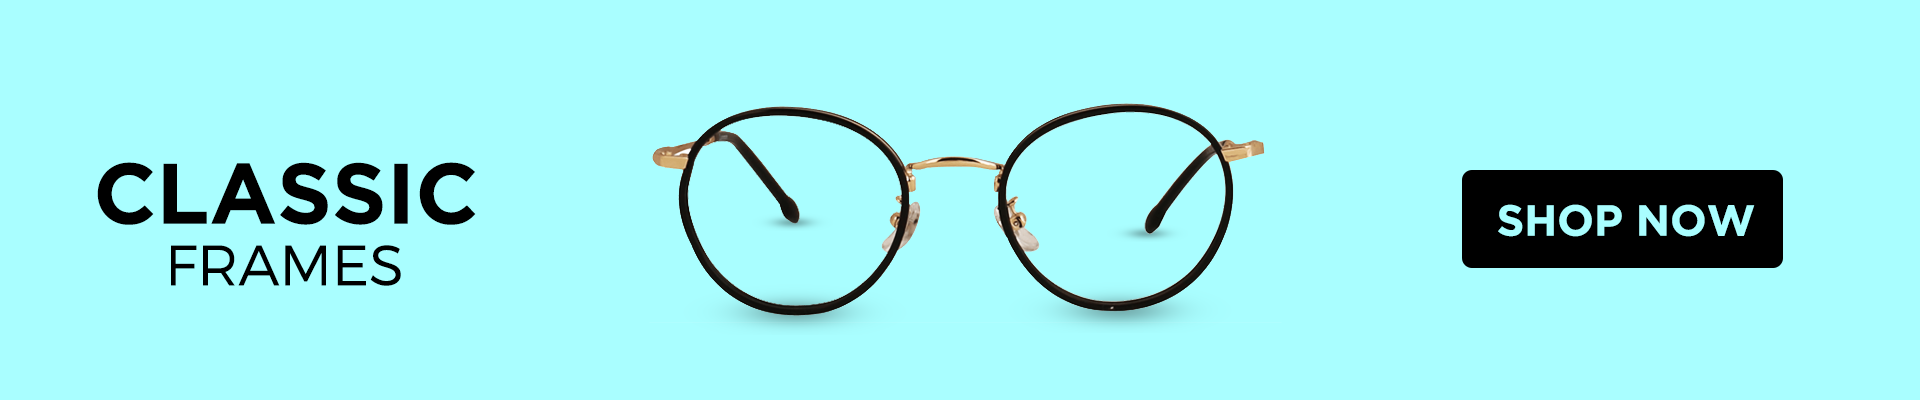 Buy Classic Eyeglasses at Goggles4U